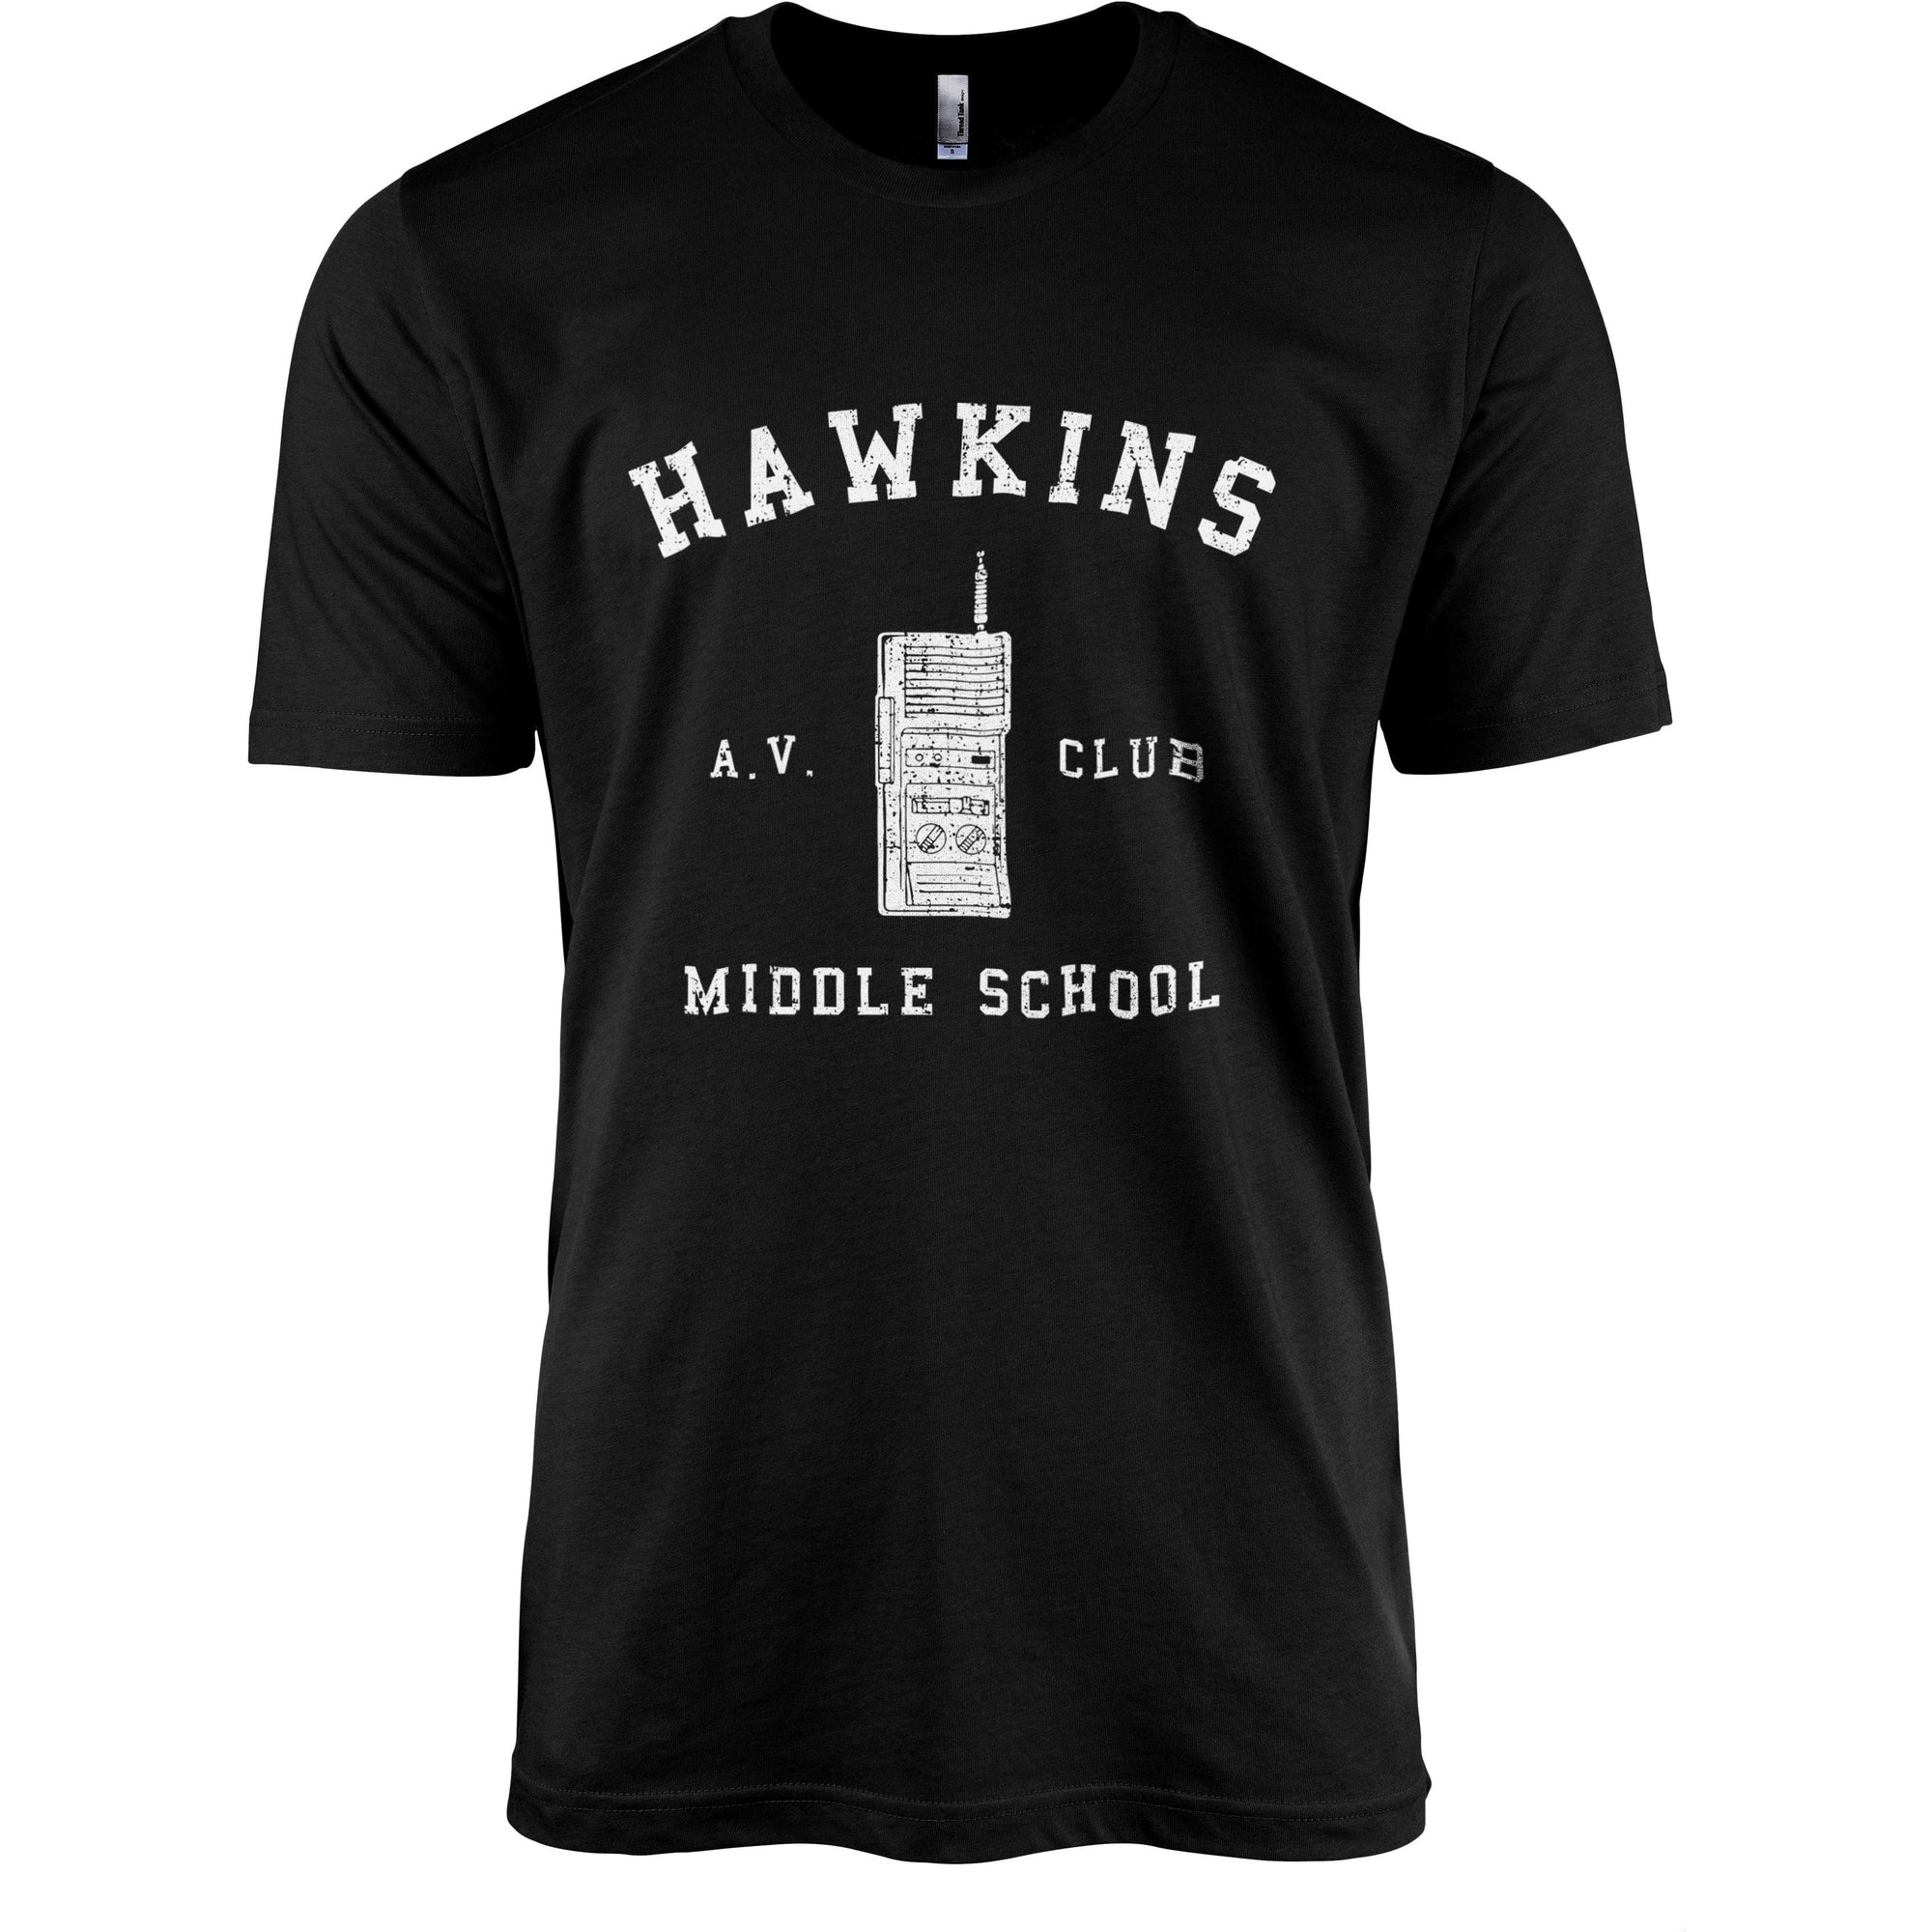 Hawkins Middle School - thread tank | Stories you can wear.